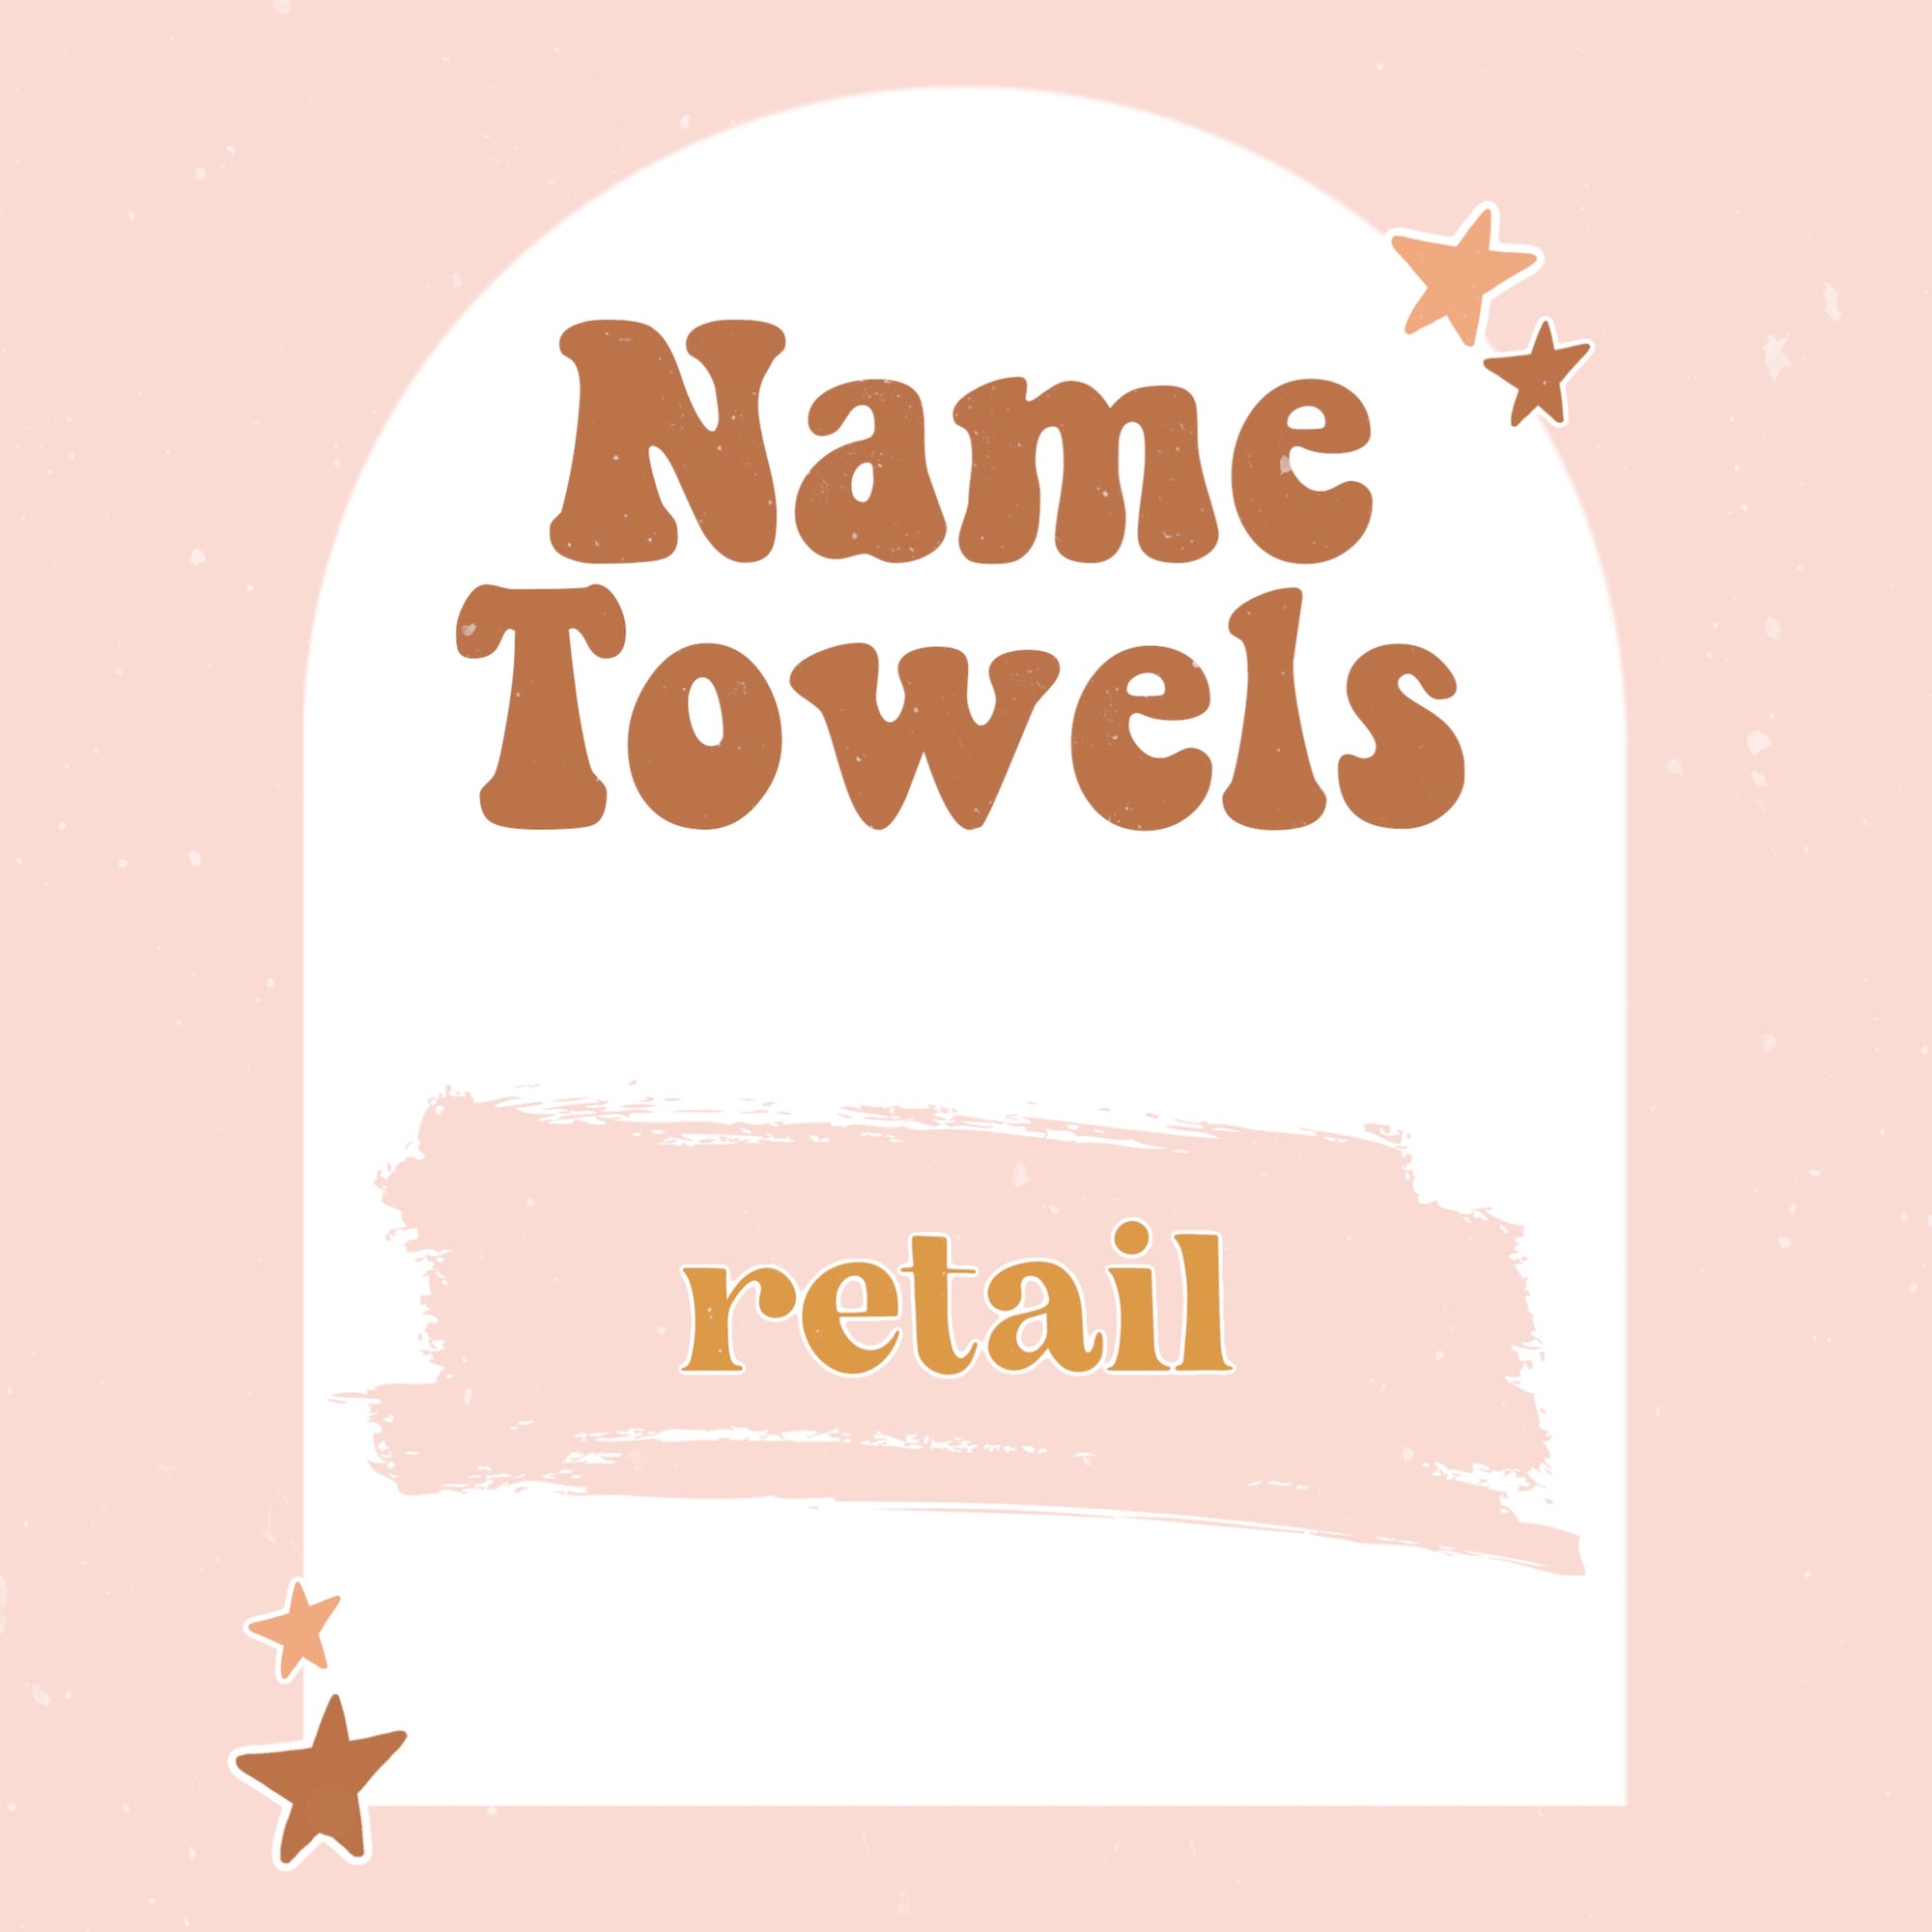 RETAIL Name towels